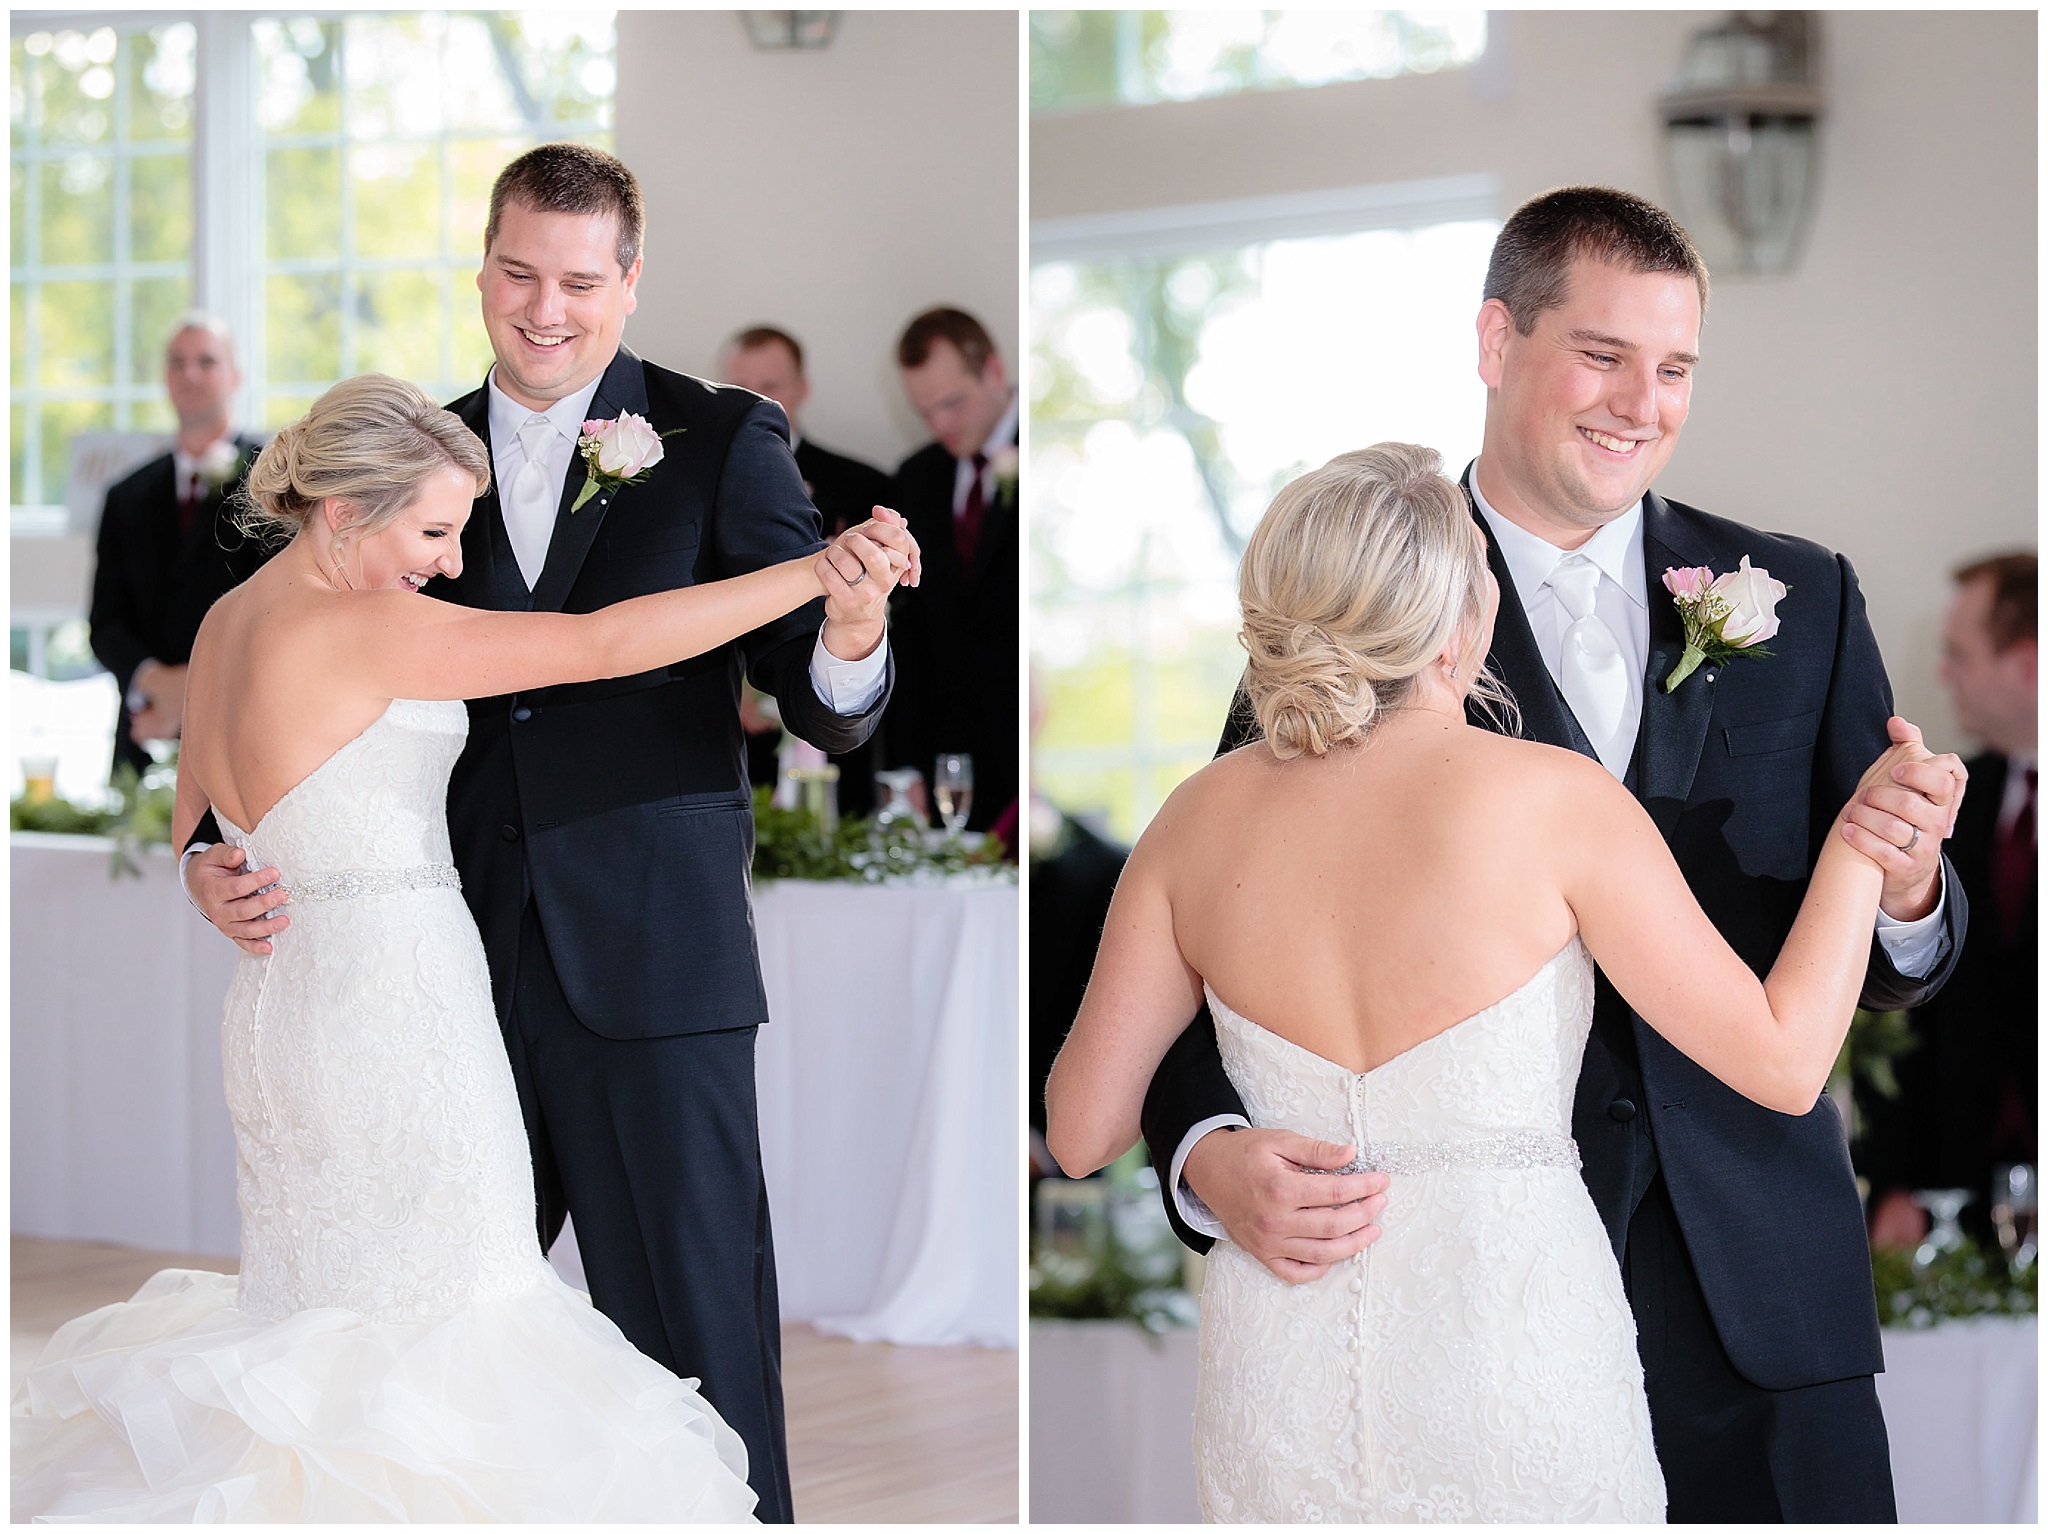 Newlyweds' first dance at their Greystone Fields wedding